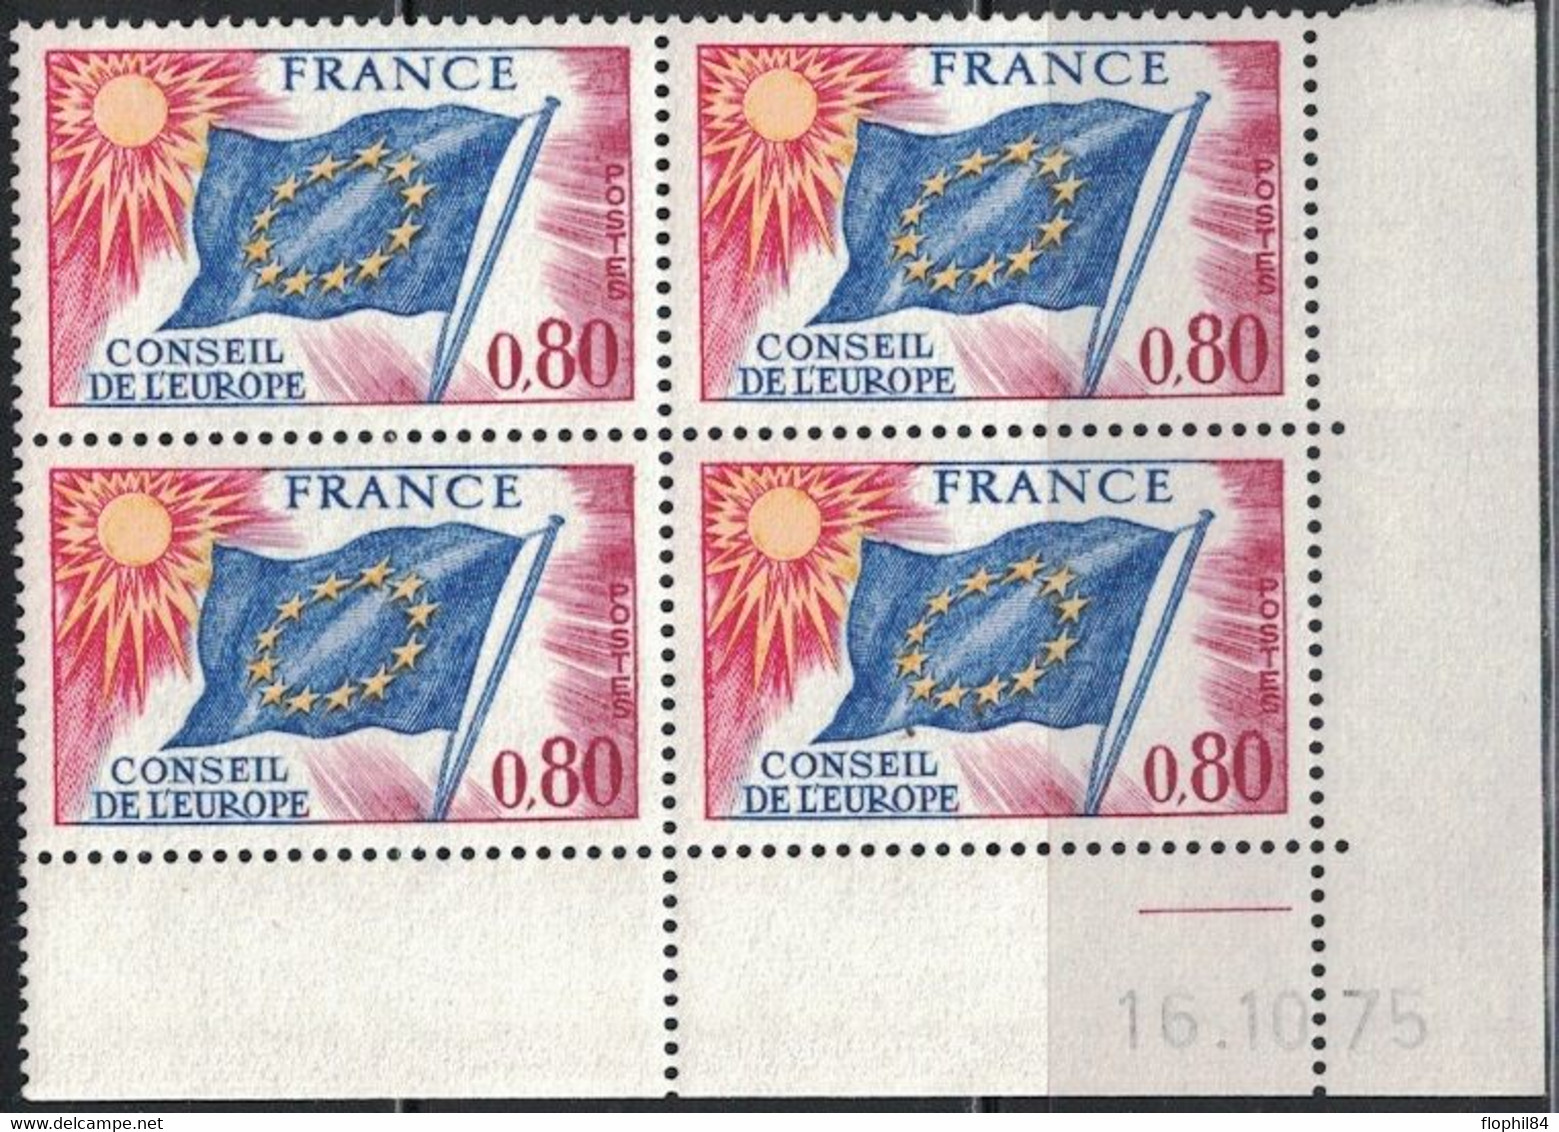 COIN DATE - SERVICE N°47 - 0f80 - CONSEIL DE L'EUROPE - 16-10-1975 - Cote 10€. - Officials